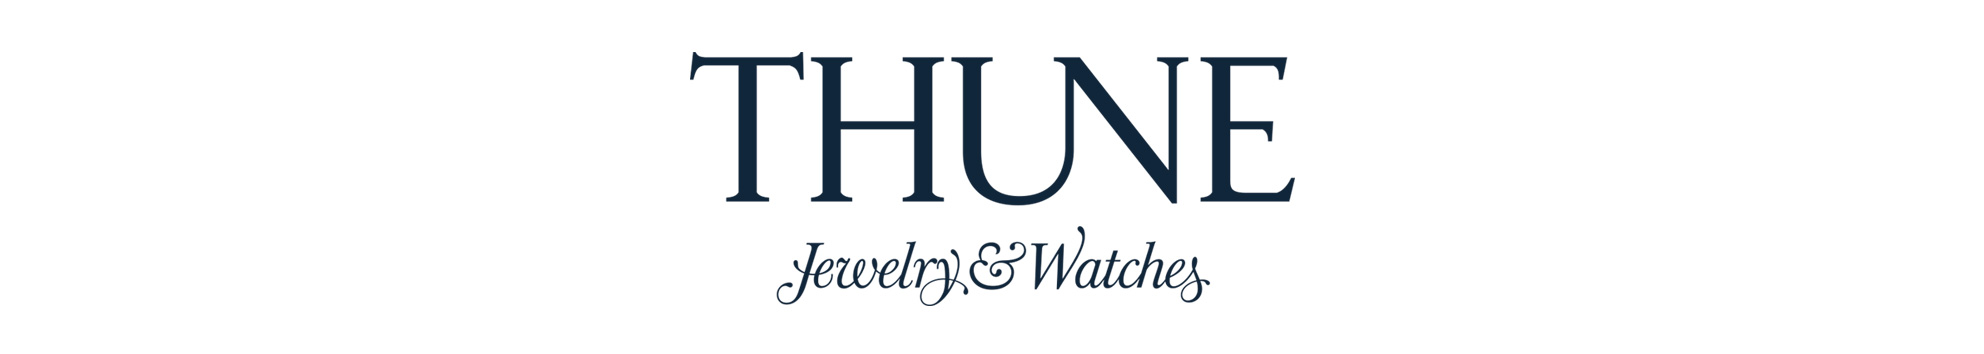 Thune jewelry & watches logo. Visuell identitet Visual identity.